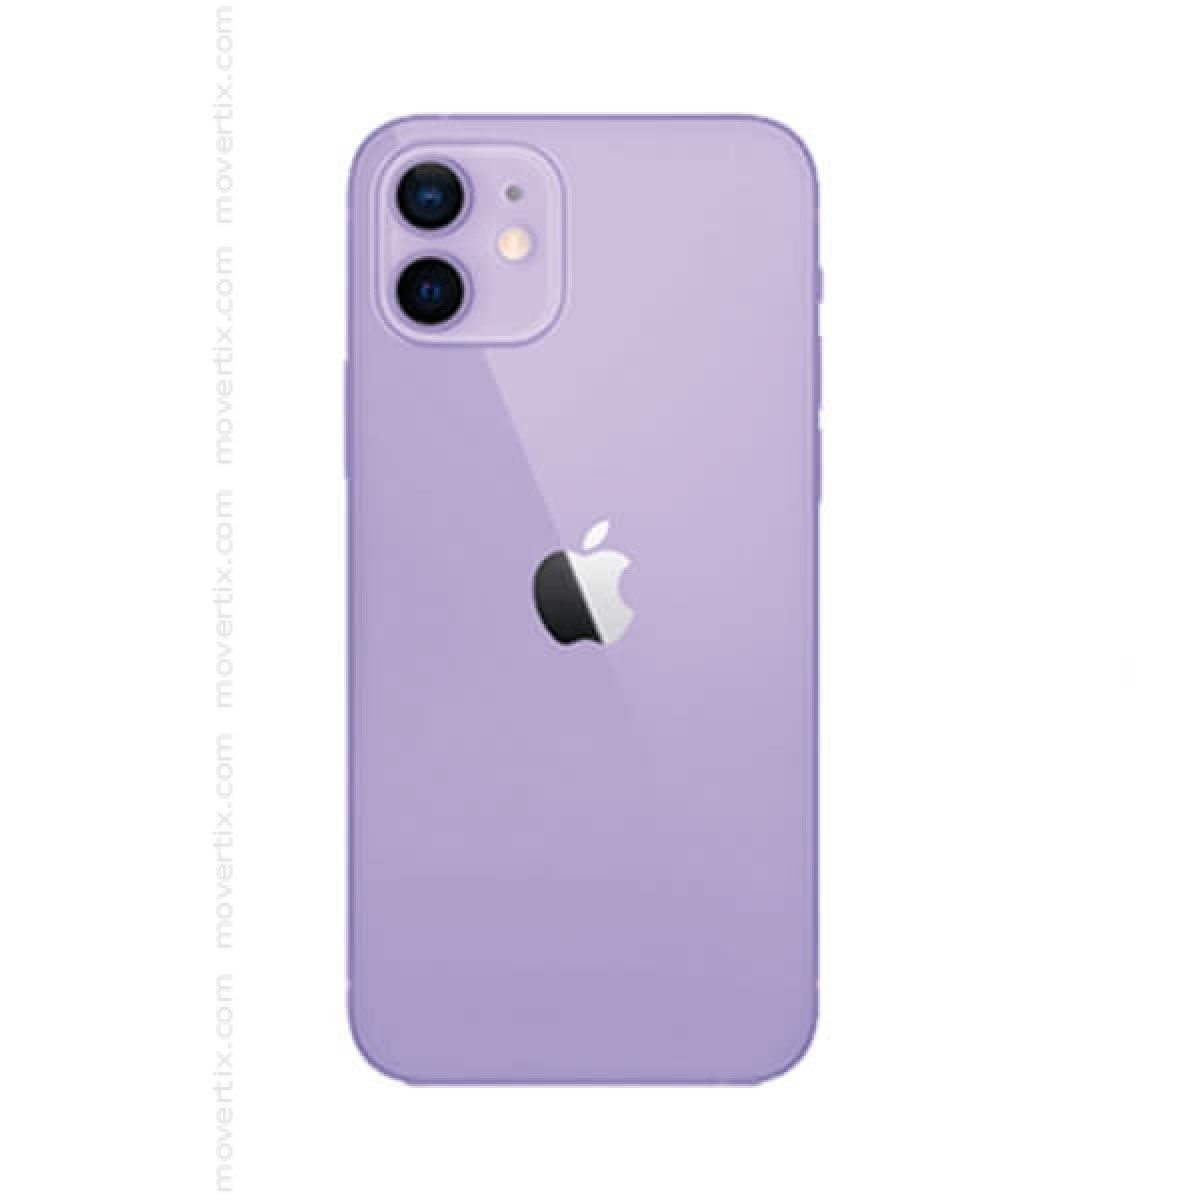 Iphone 12 Purple 128gb Movertix Mobile Phones Shop